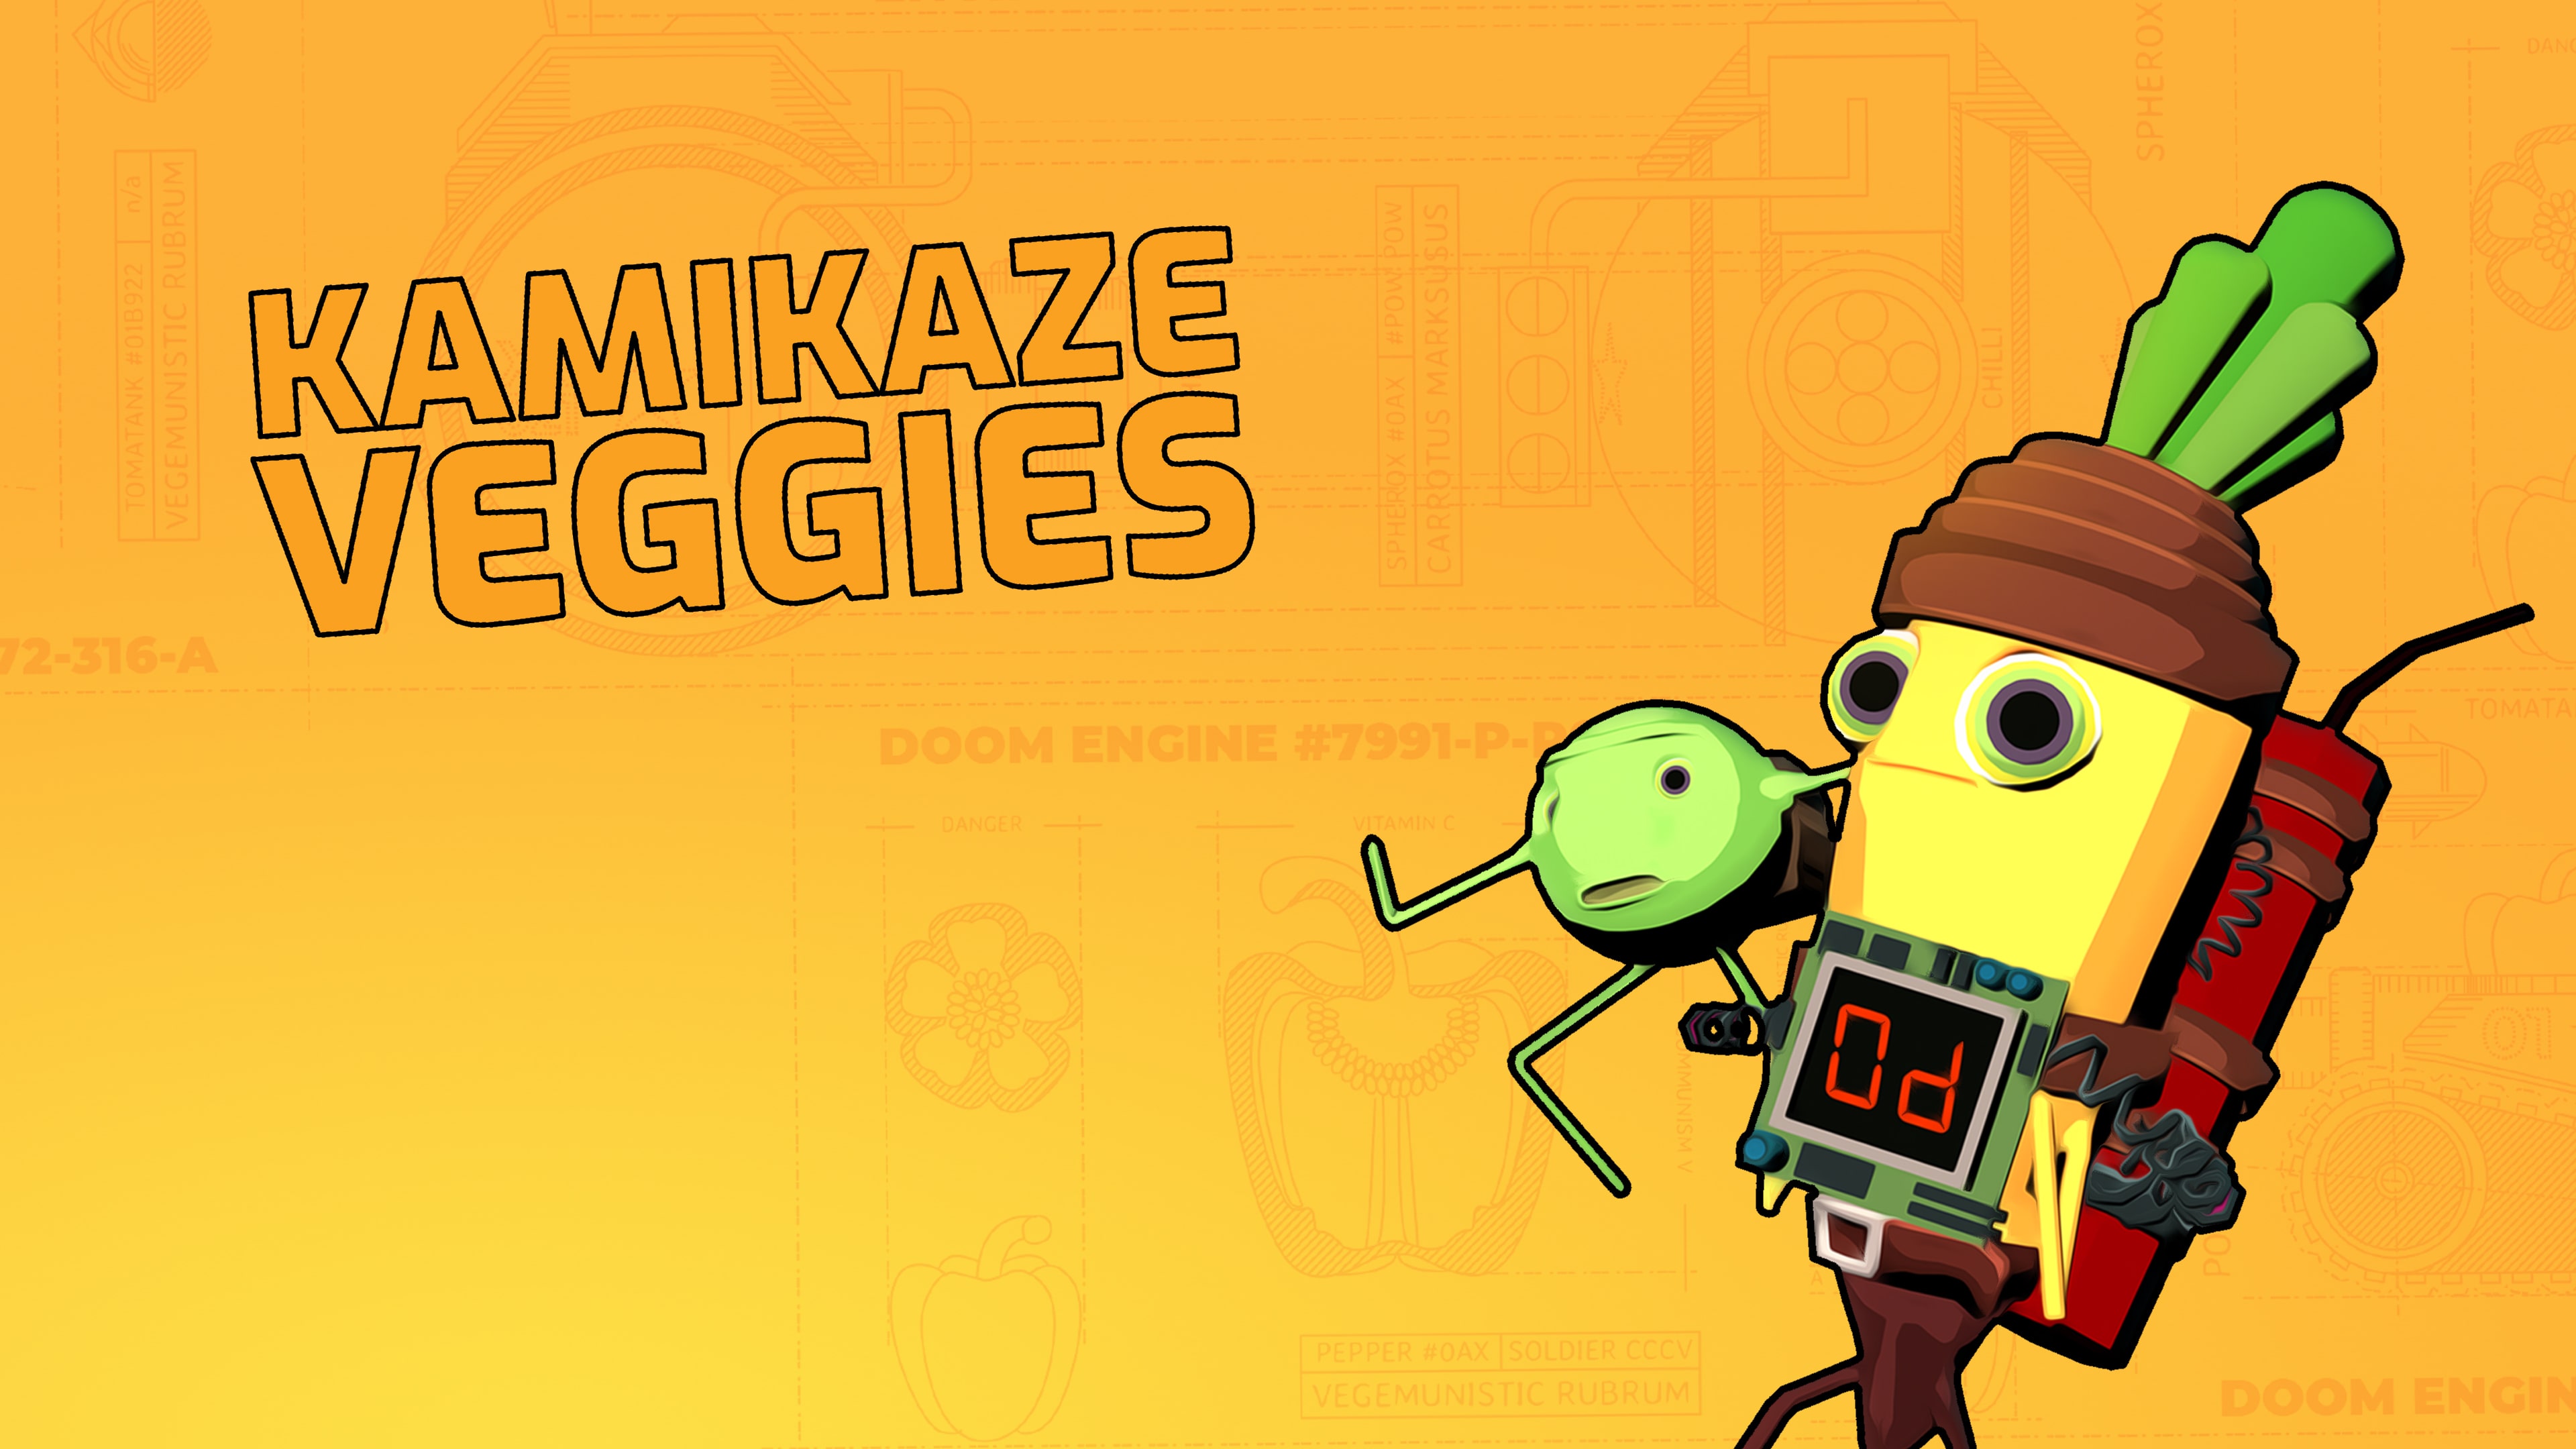 The official demo of our crazy game! 🥦 news - Kamikaze Veggies - Mod DB